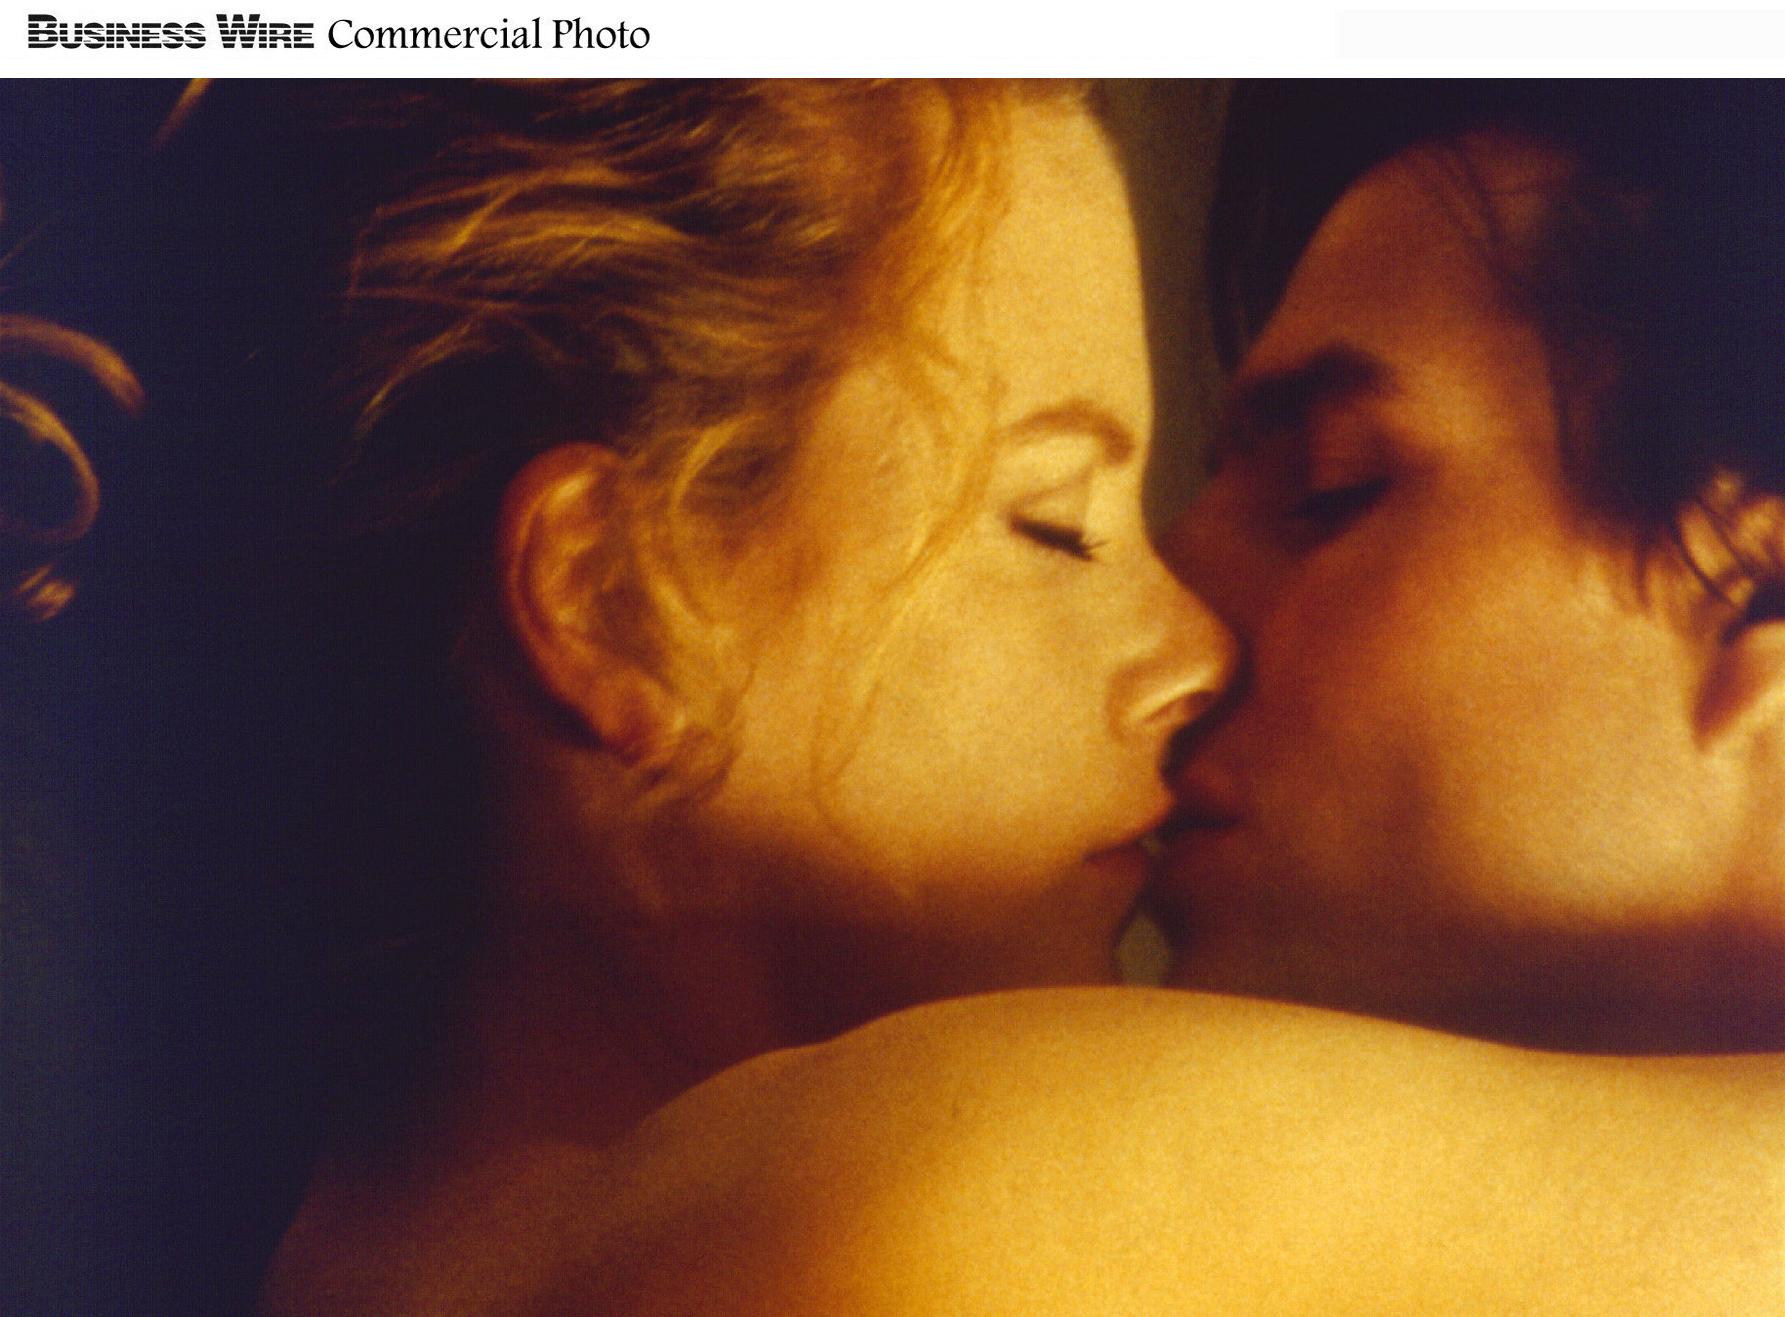 Tom Cruise and Nicole Kidman in Eyes Wide Shut (1999)